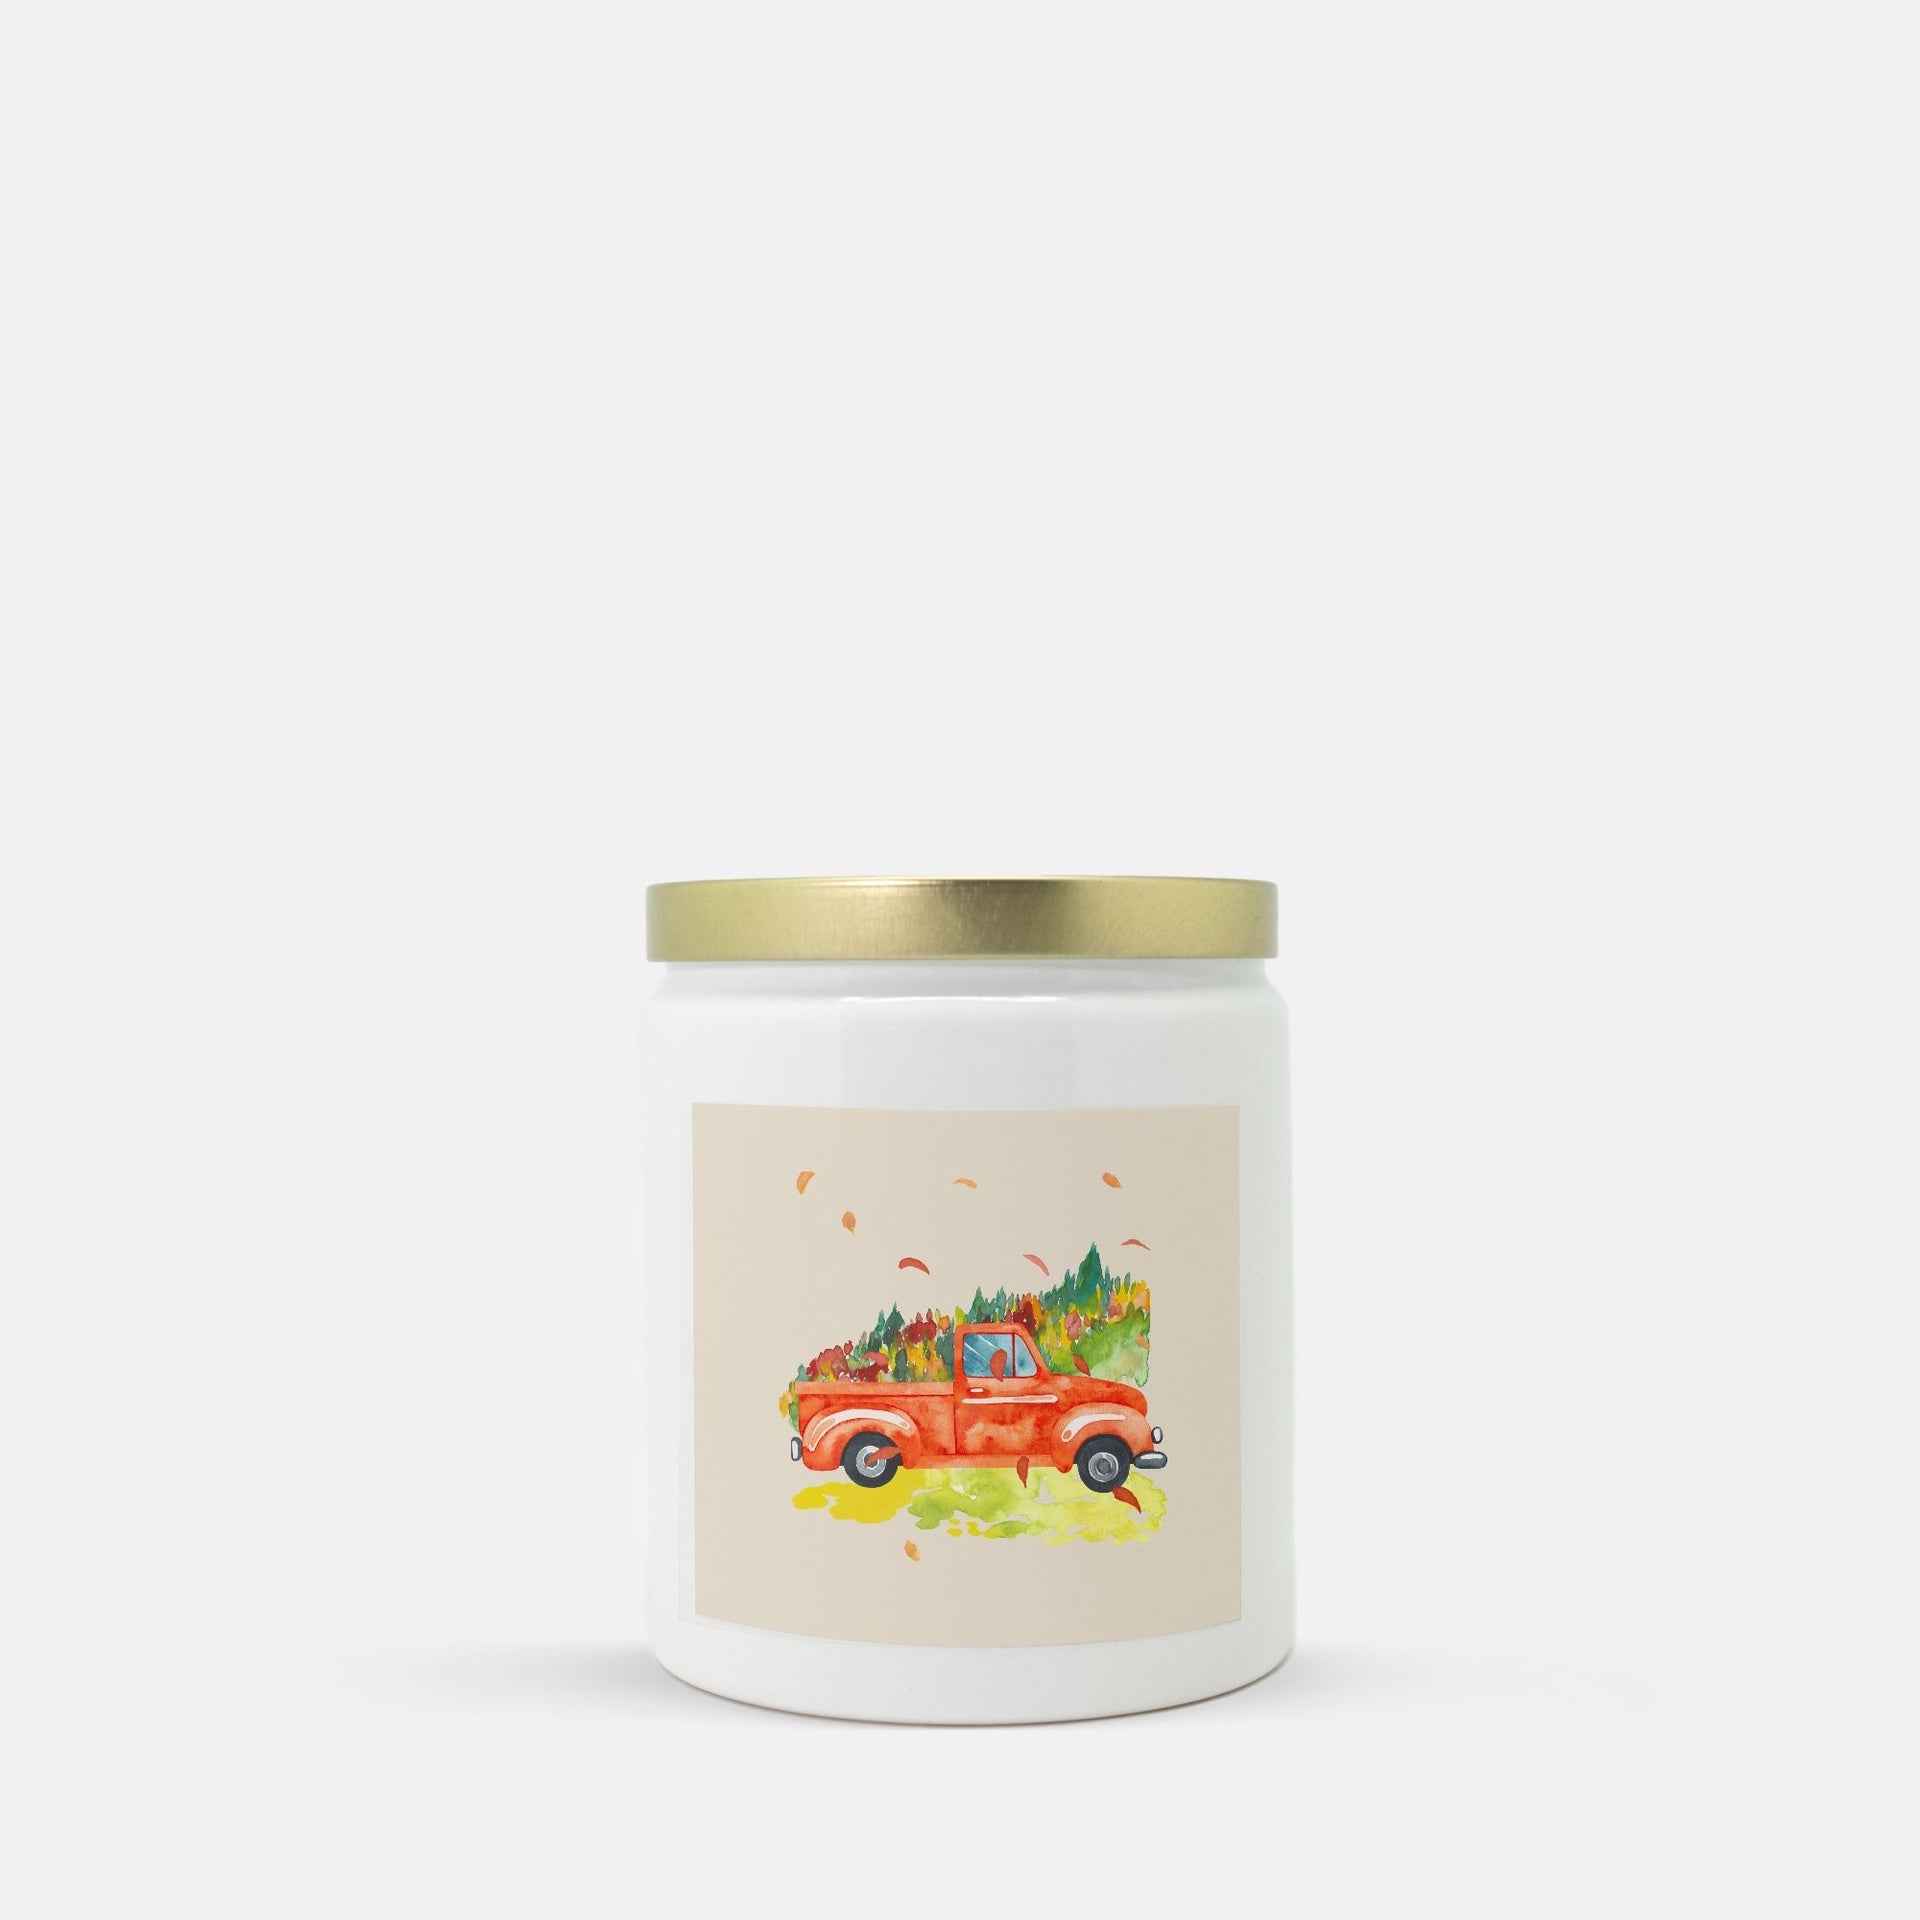 Lifestyle Details - Orange Rustic Truck & Leaves Ceramic Candle w Gold Lid - Vanilla Bean